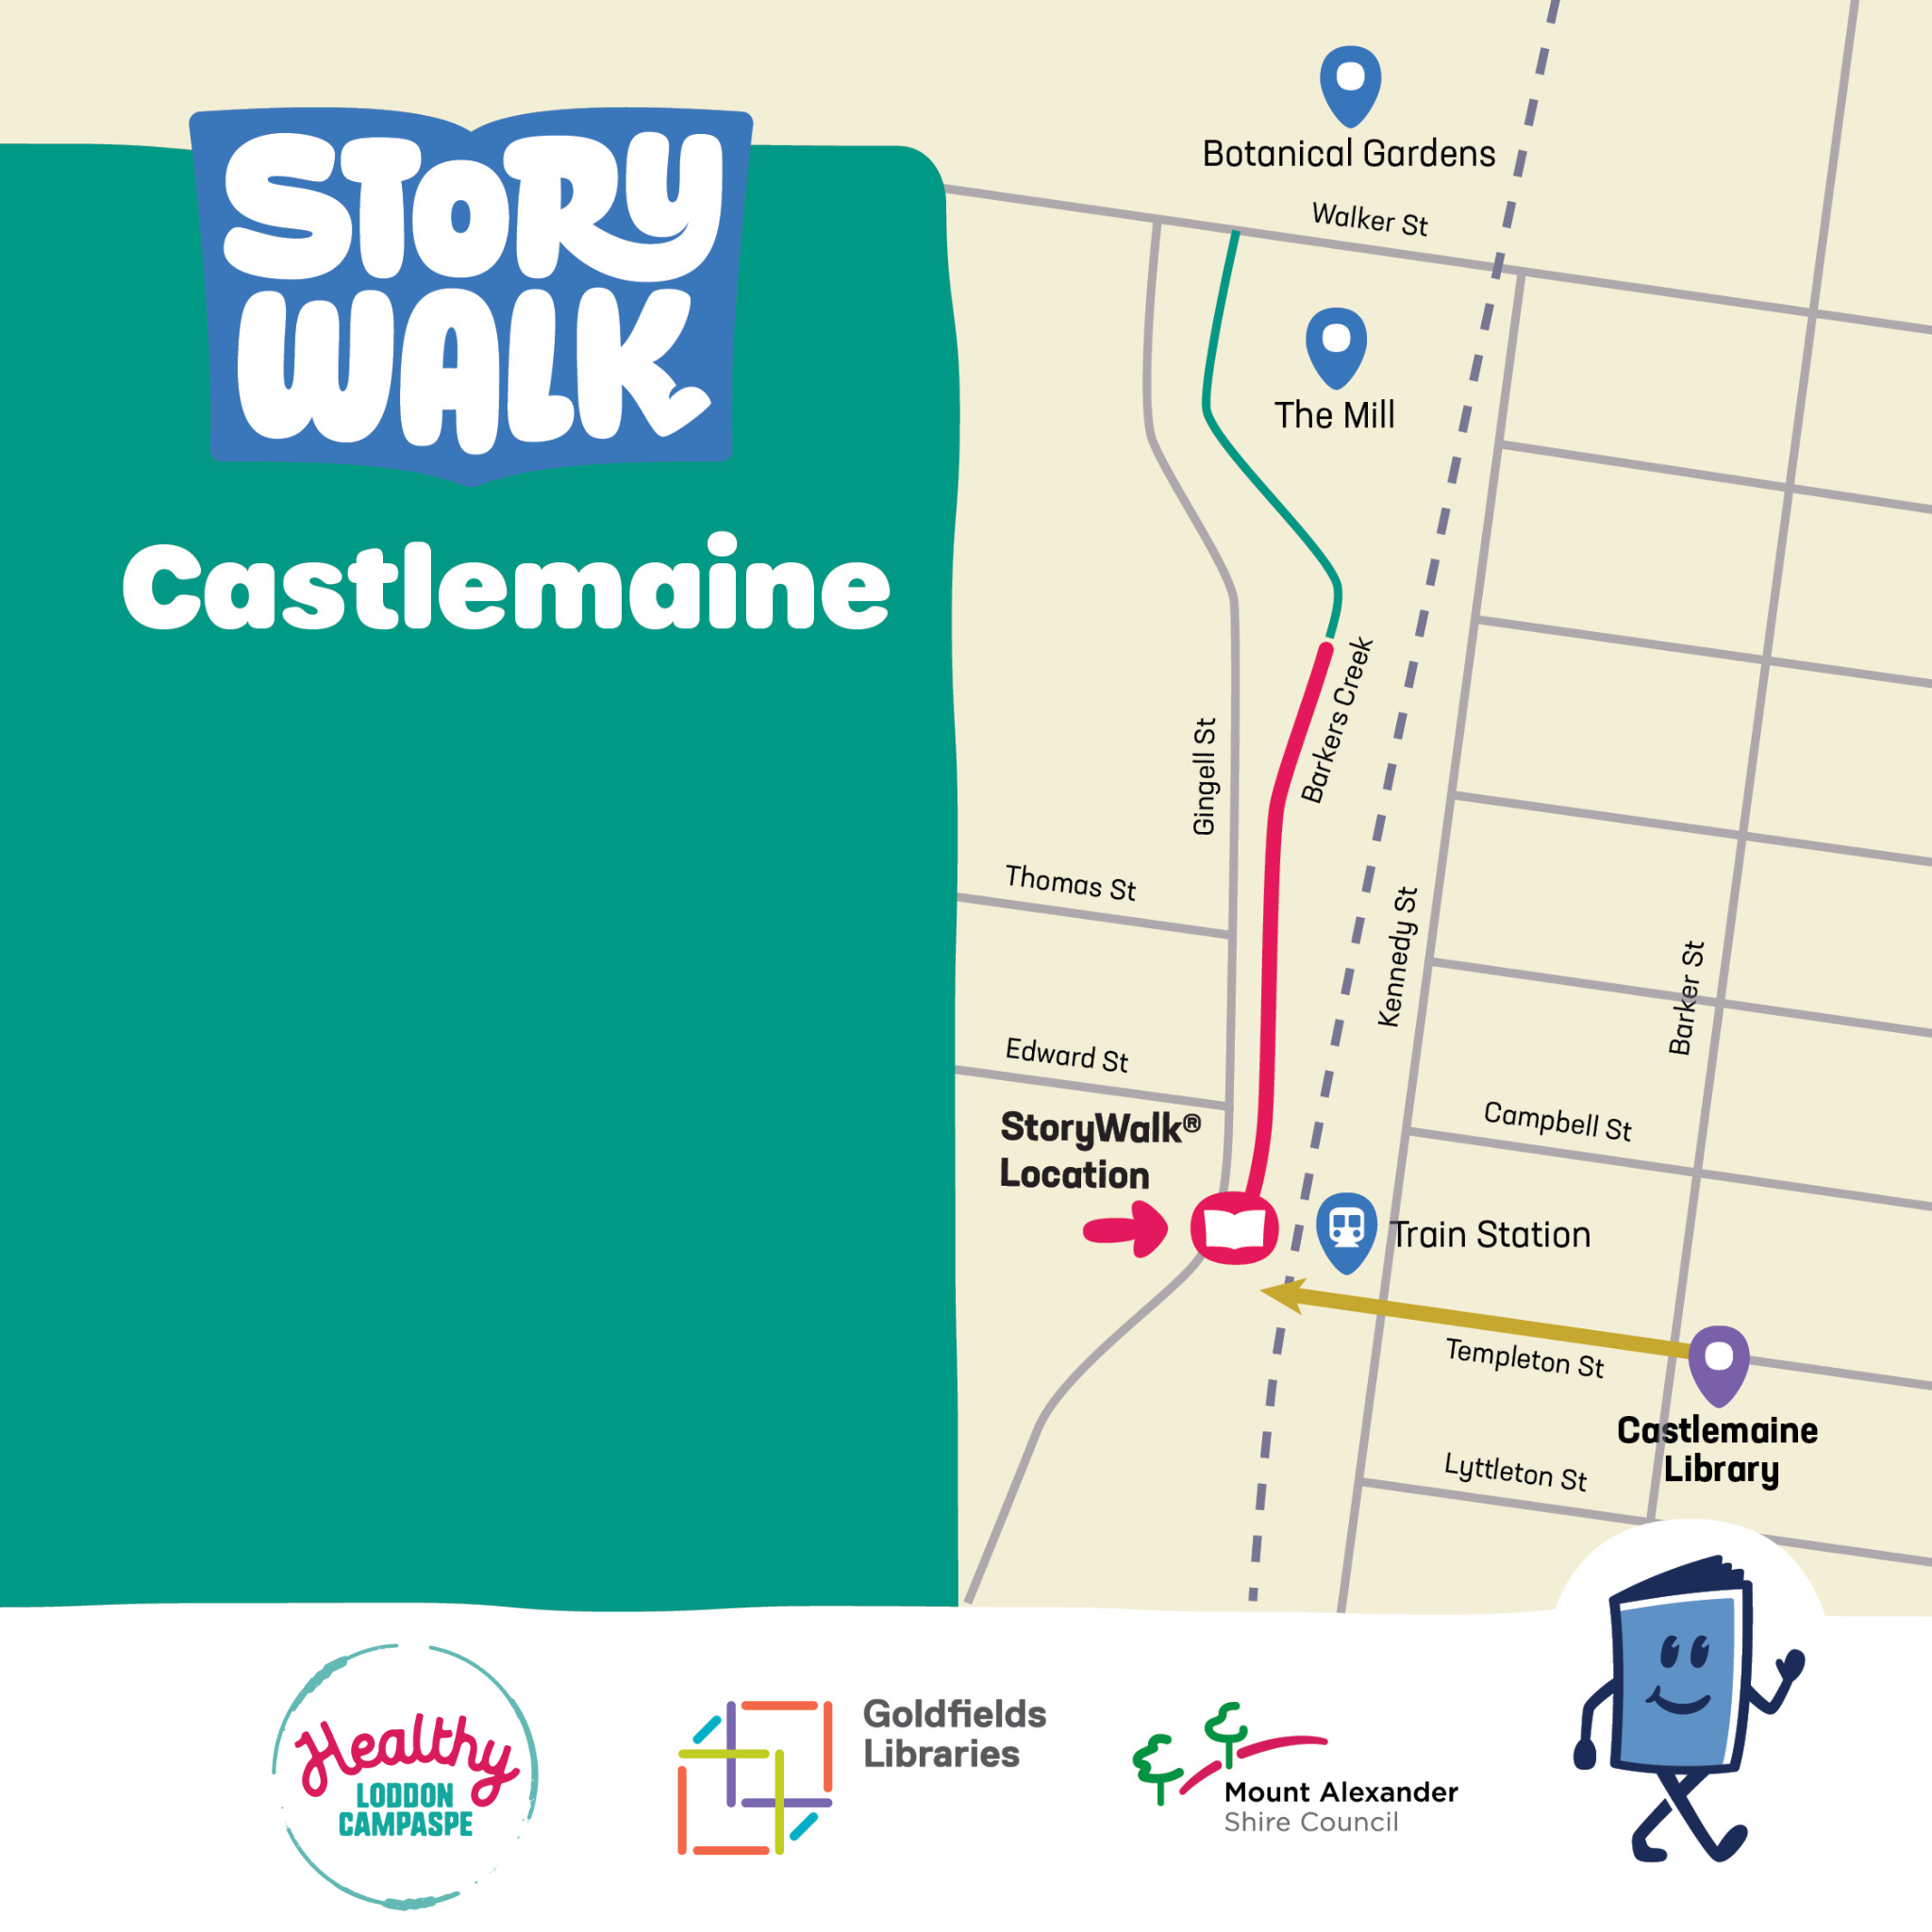 Castlemaine StoryWalk location